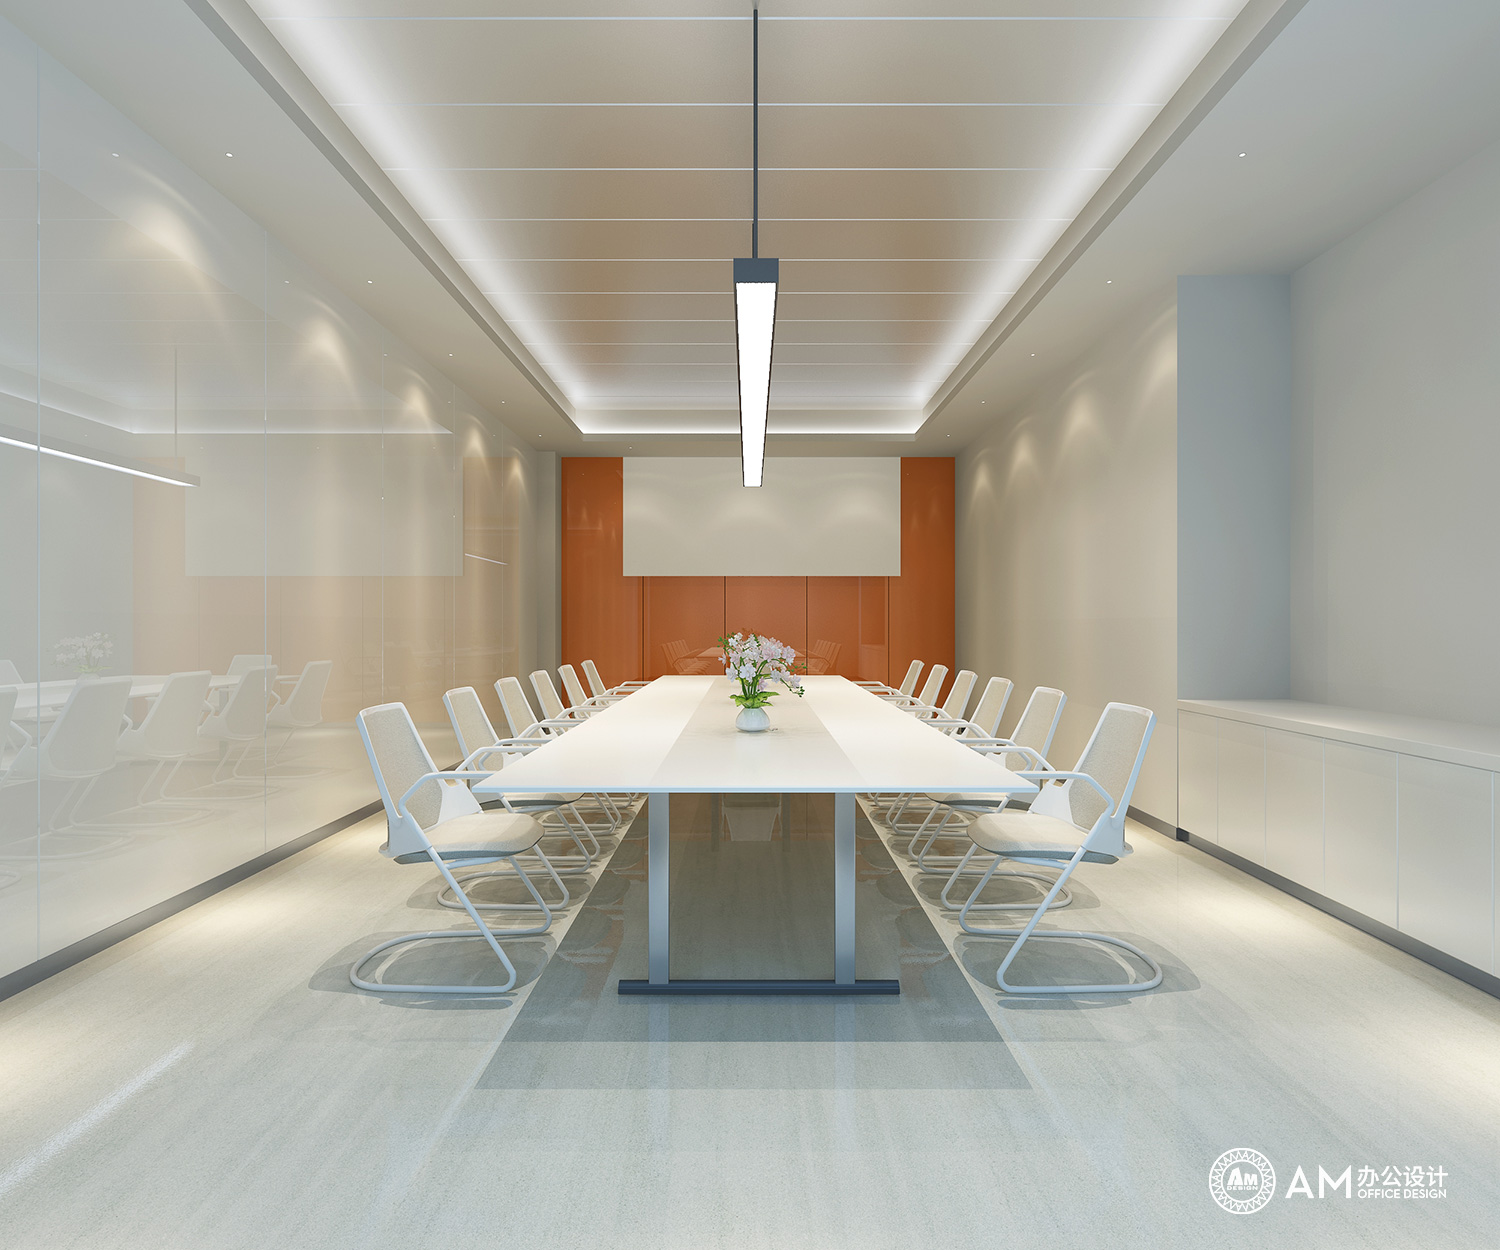 AM设计 | 新城热力办公楼会议室设计